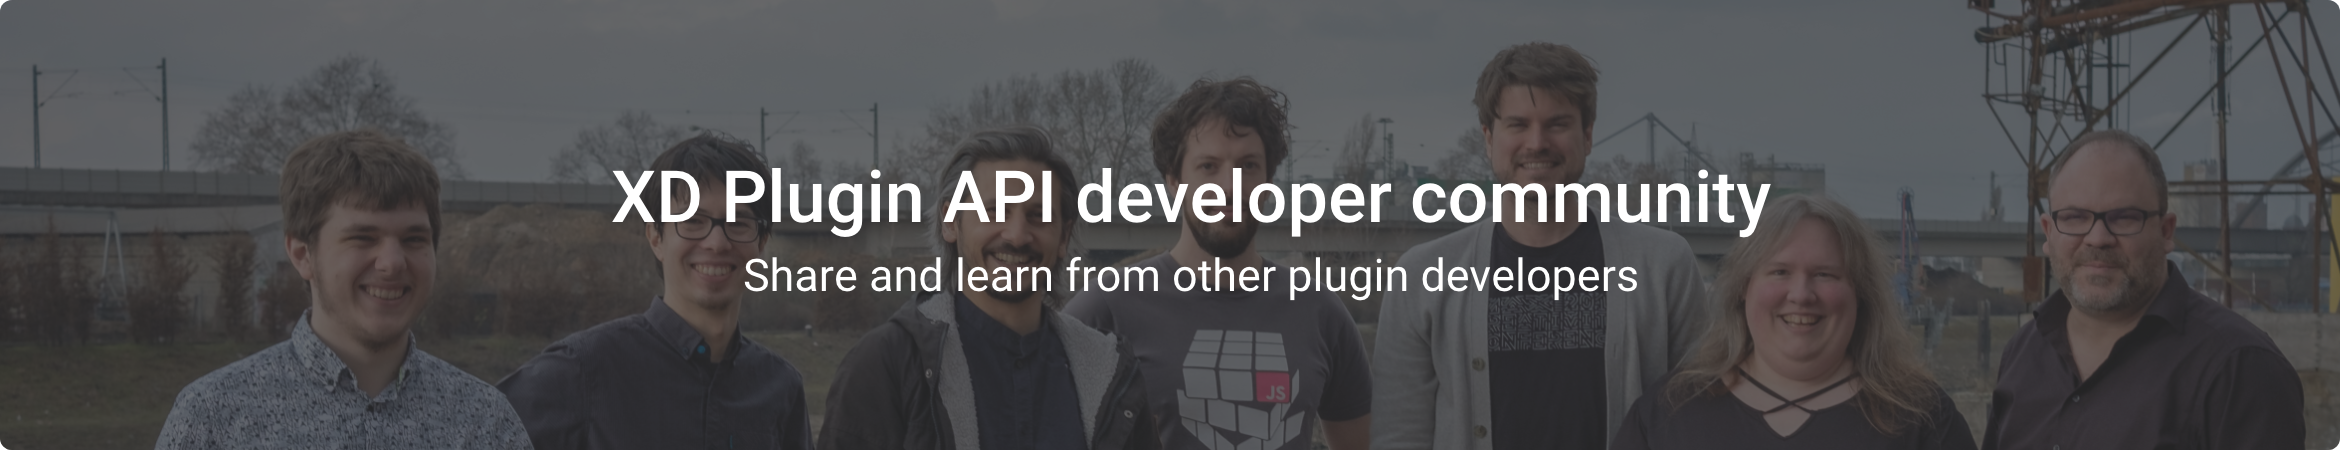 XD Plugin API developer community